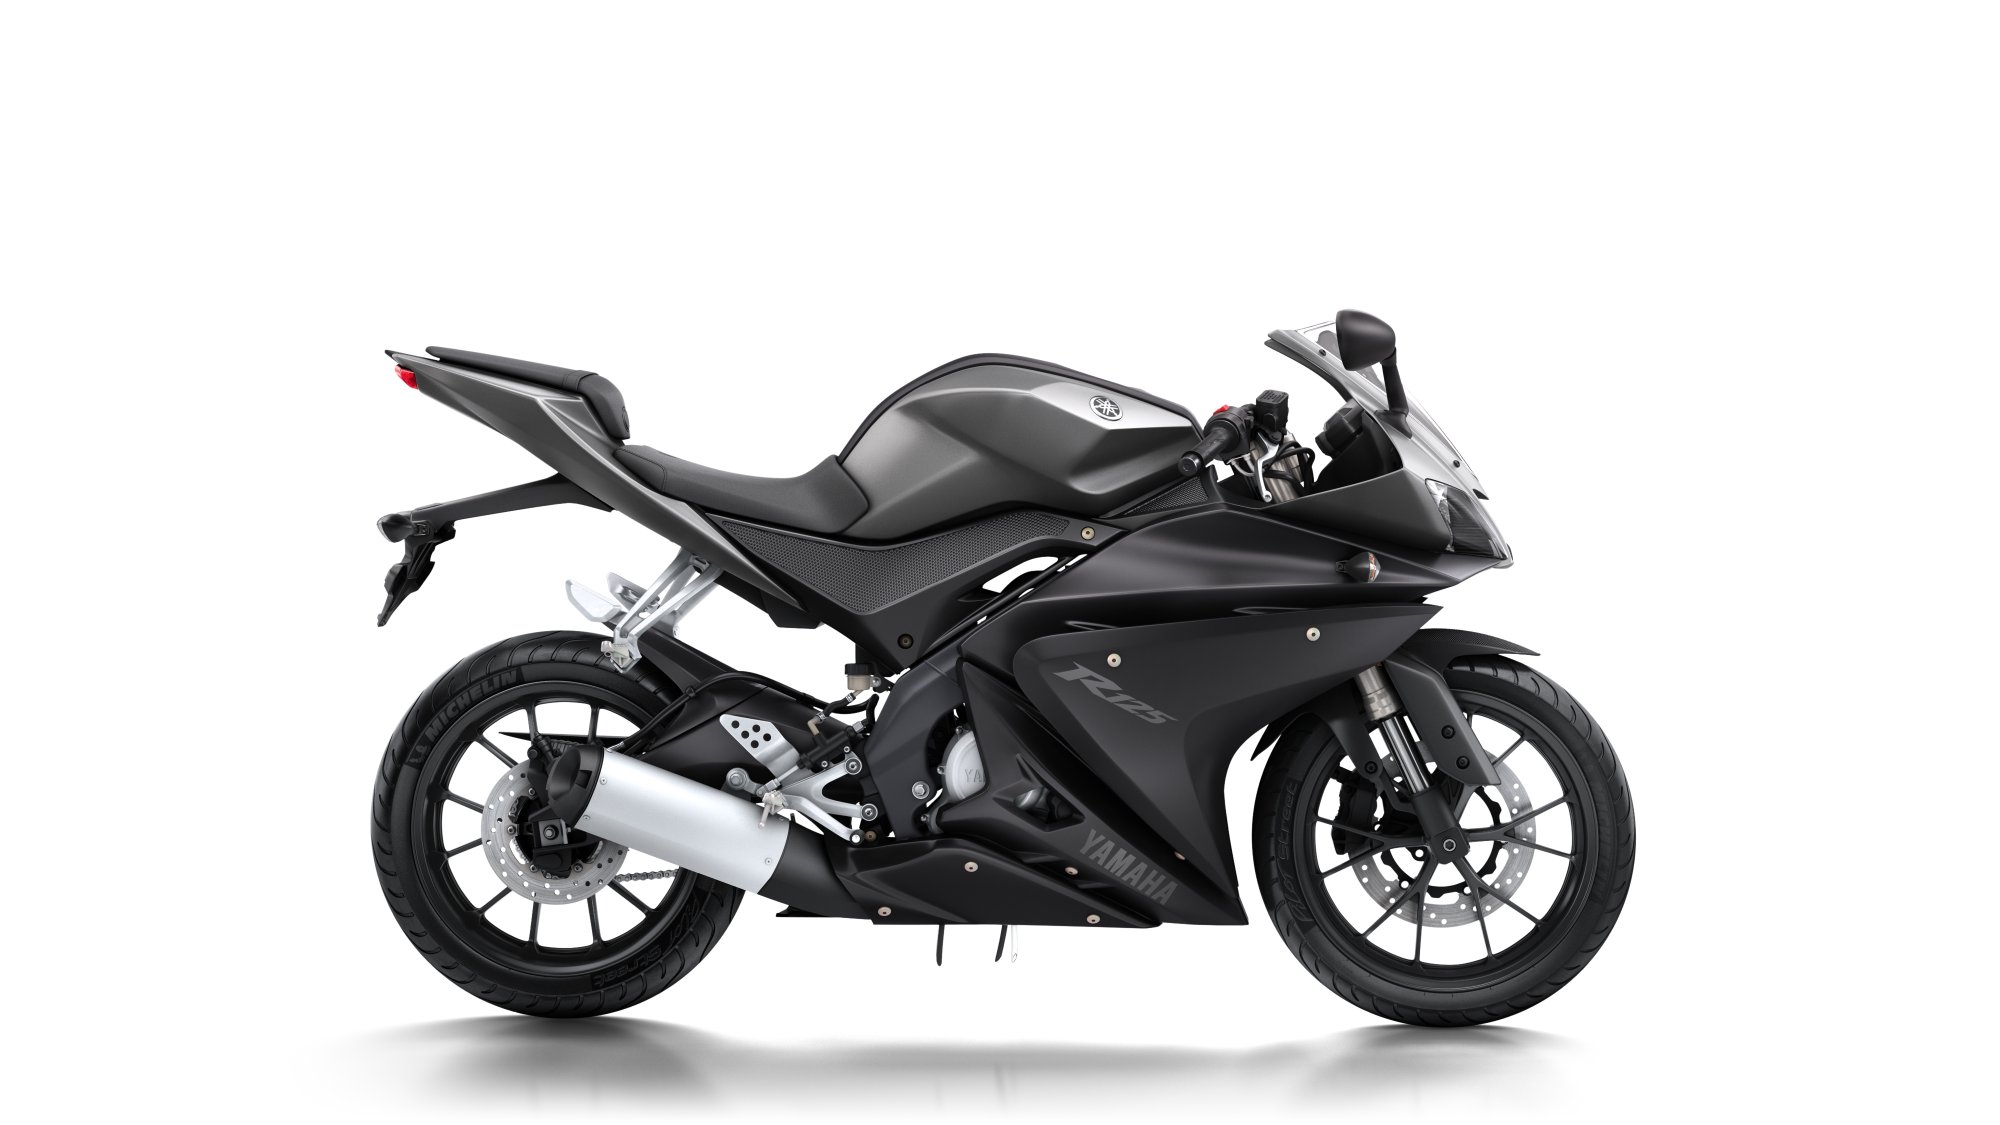 Motorrad Vergleich Online Bestia 125 ABS 2021 vs. Yamaha R125 2015